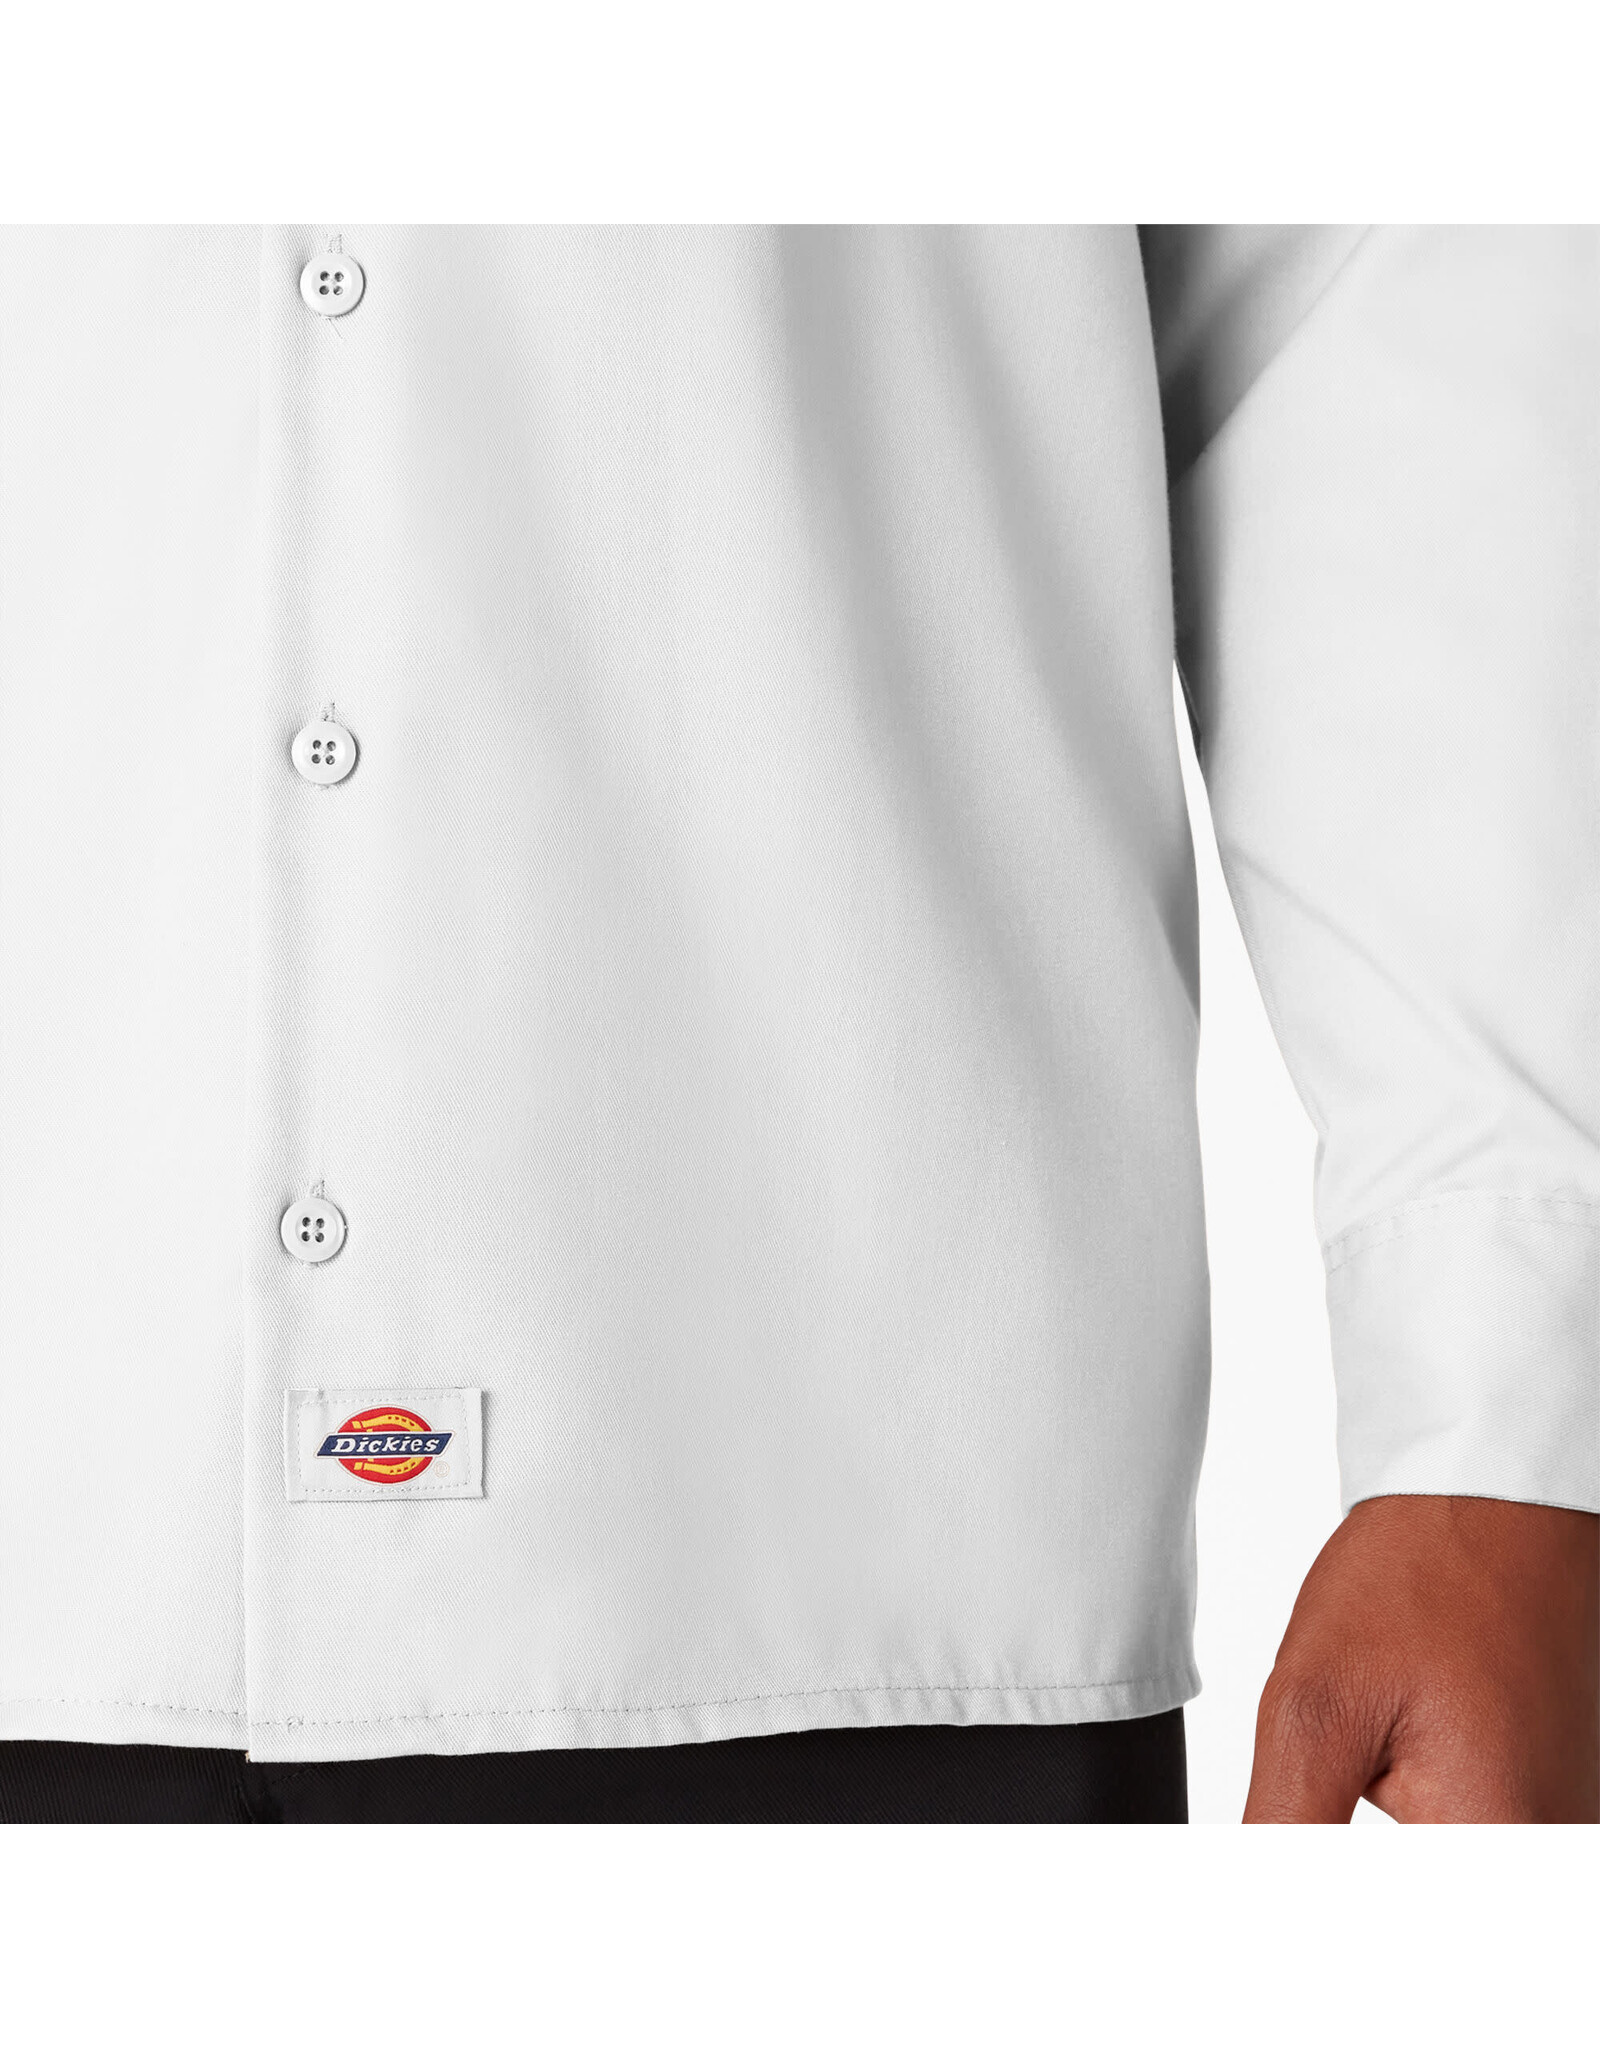 DICKIES Long Sleeve Work Shirt White Original Fit - 574WH